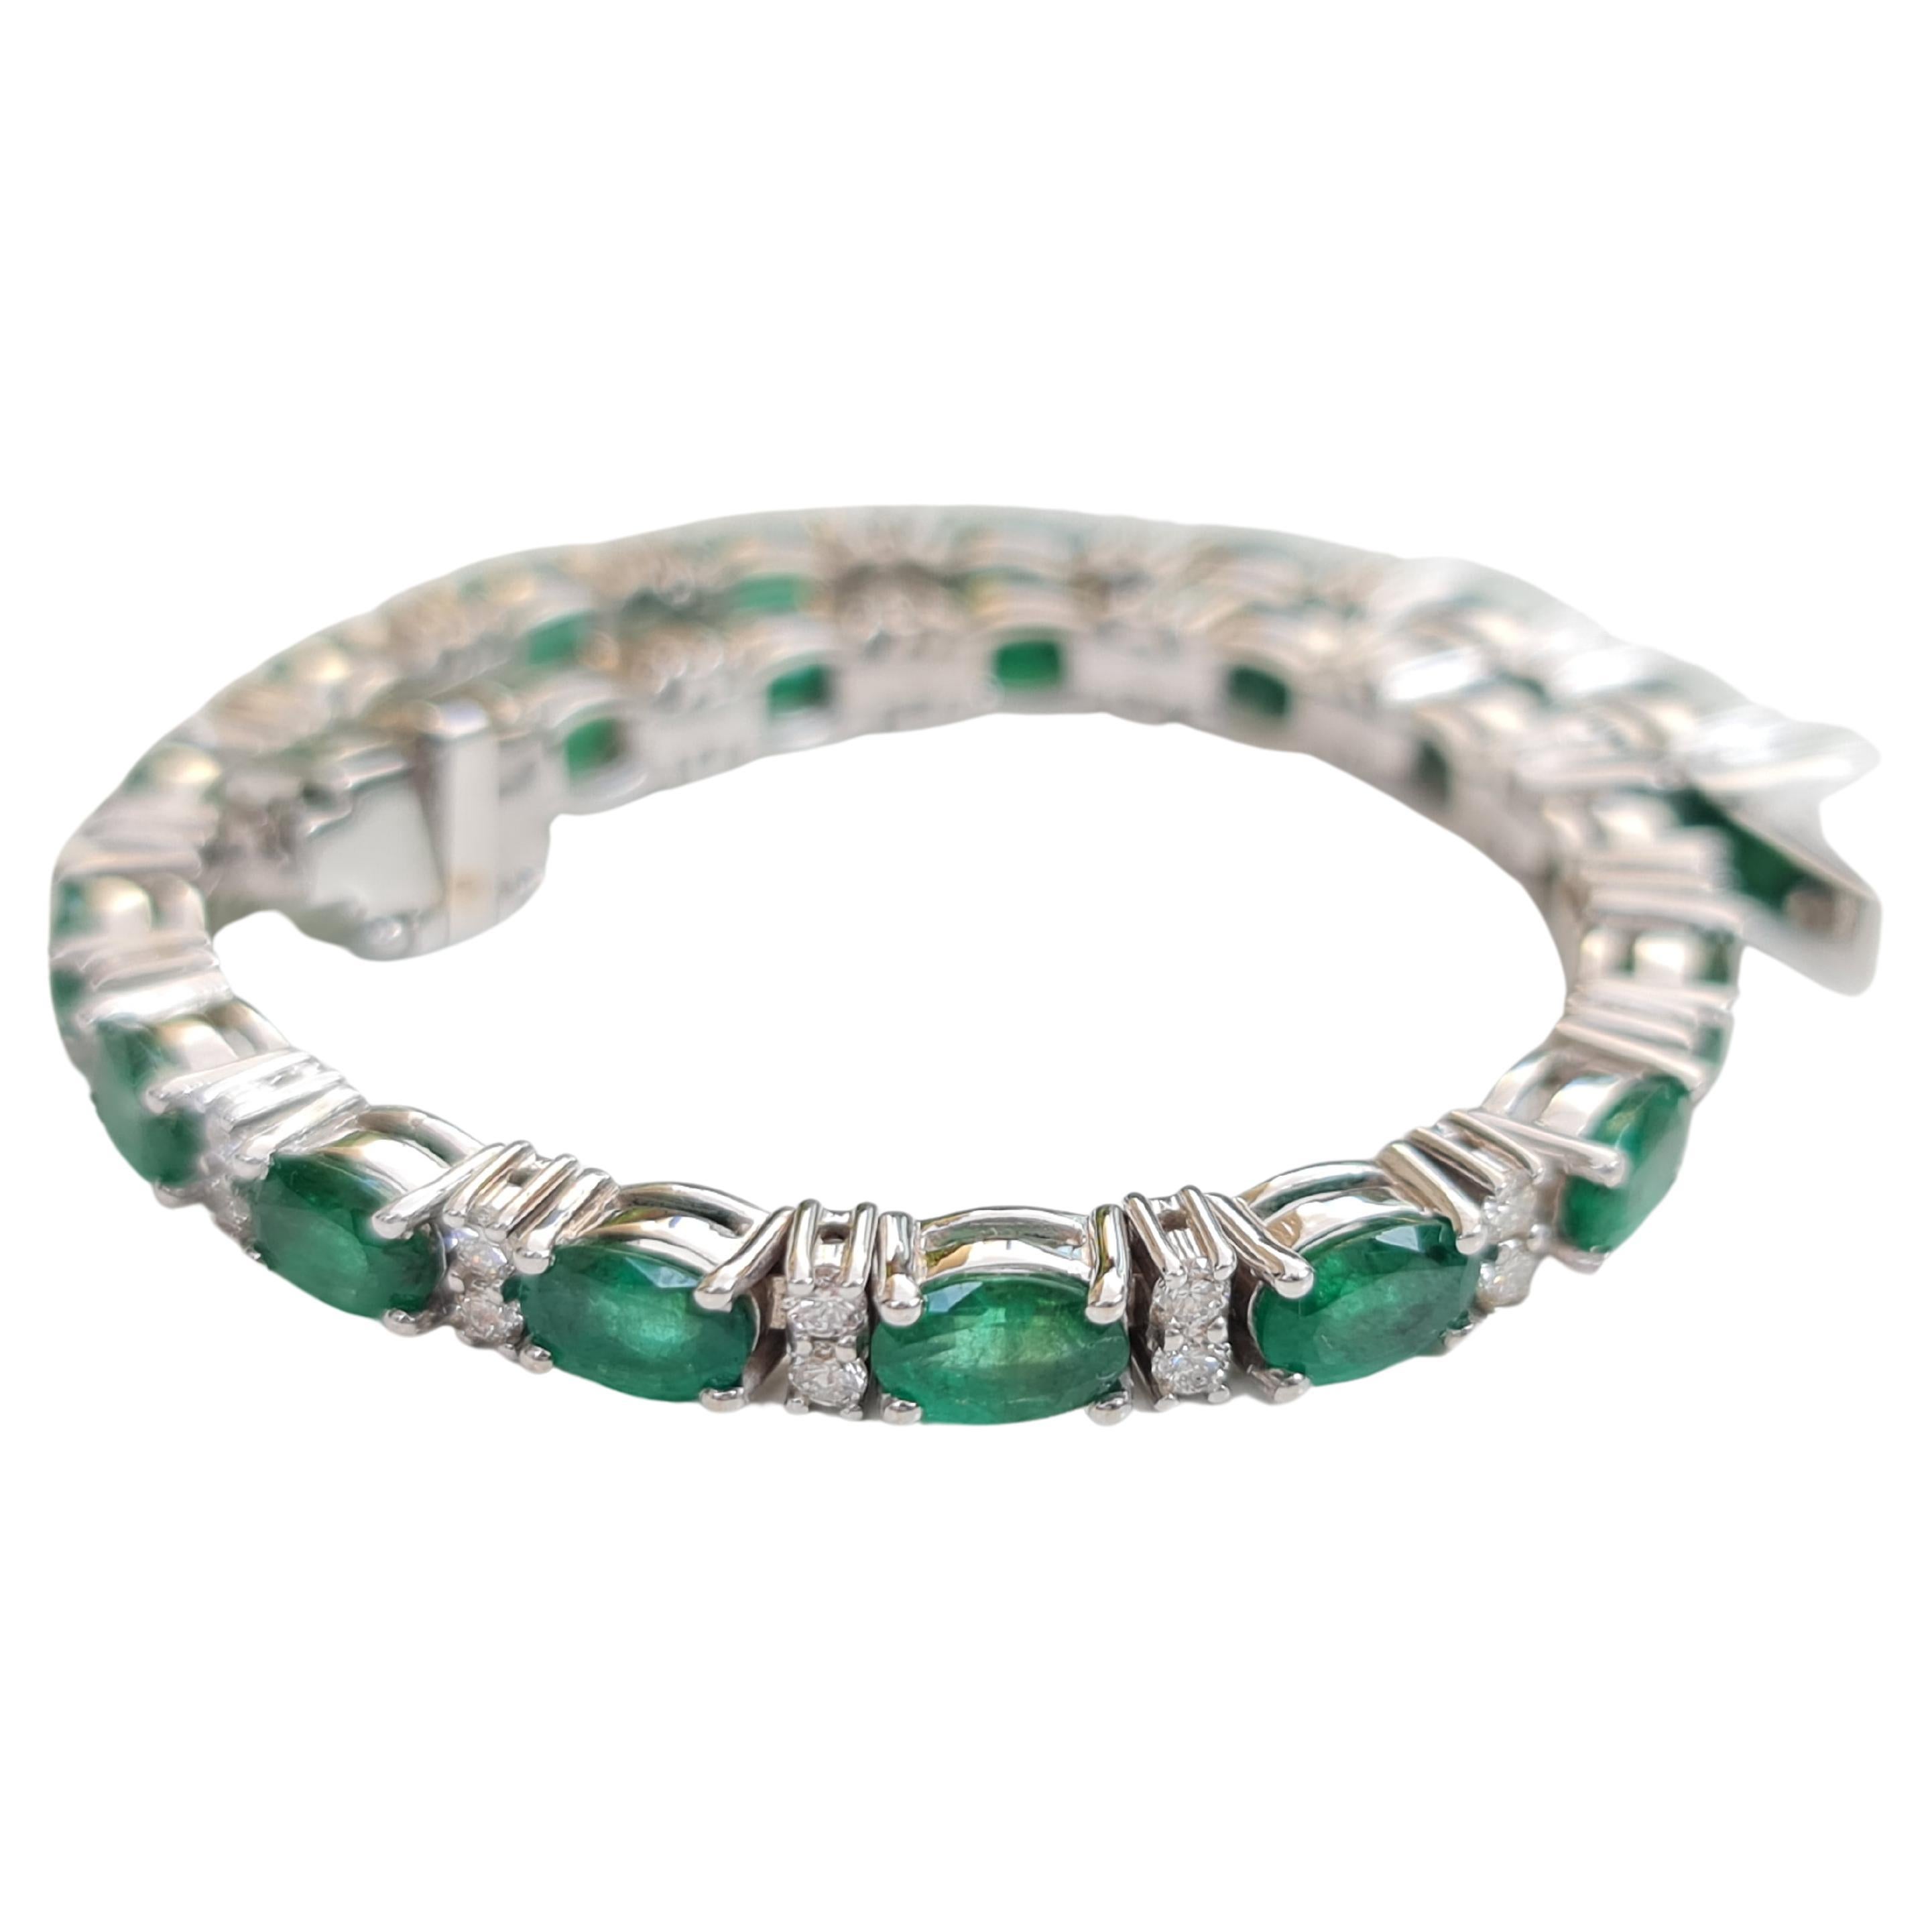 Bracelet d'émeraudes vertes naturelles de 9,16 carats et diamants naturels de 1,45 carat, or 14 carats